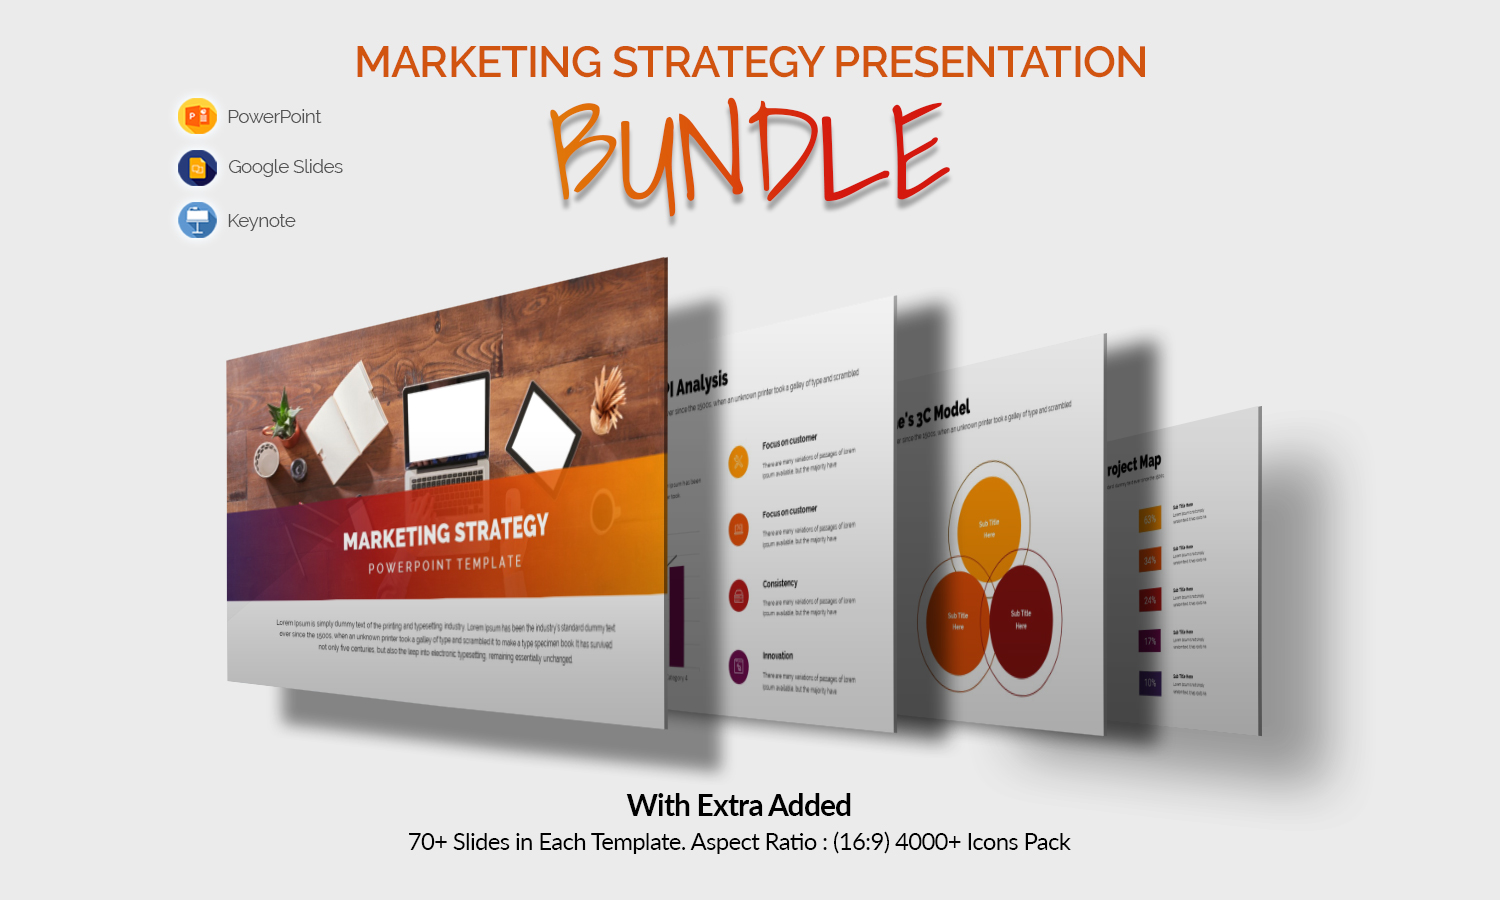 Marketing Strategy Presentation Bundle 01